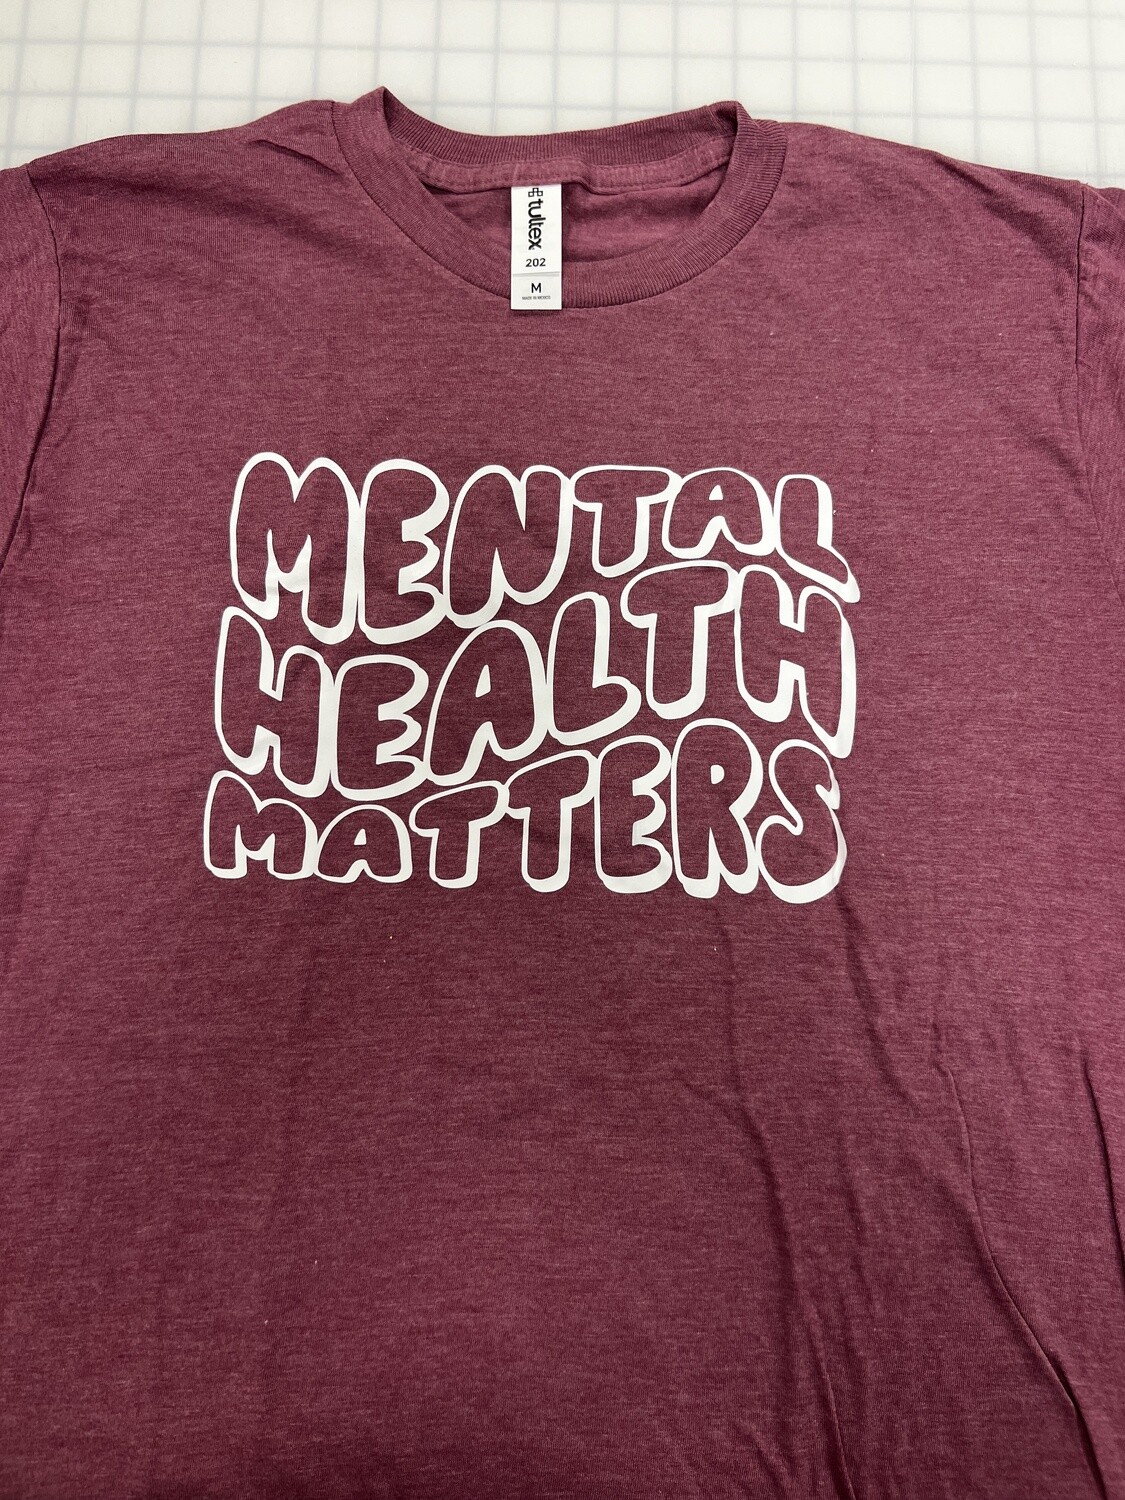 (M) Mental Health Matters - Short Sleeve Heather Cassis